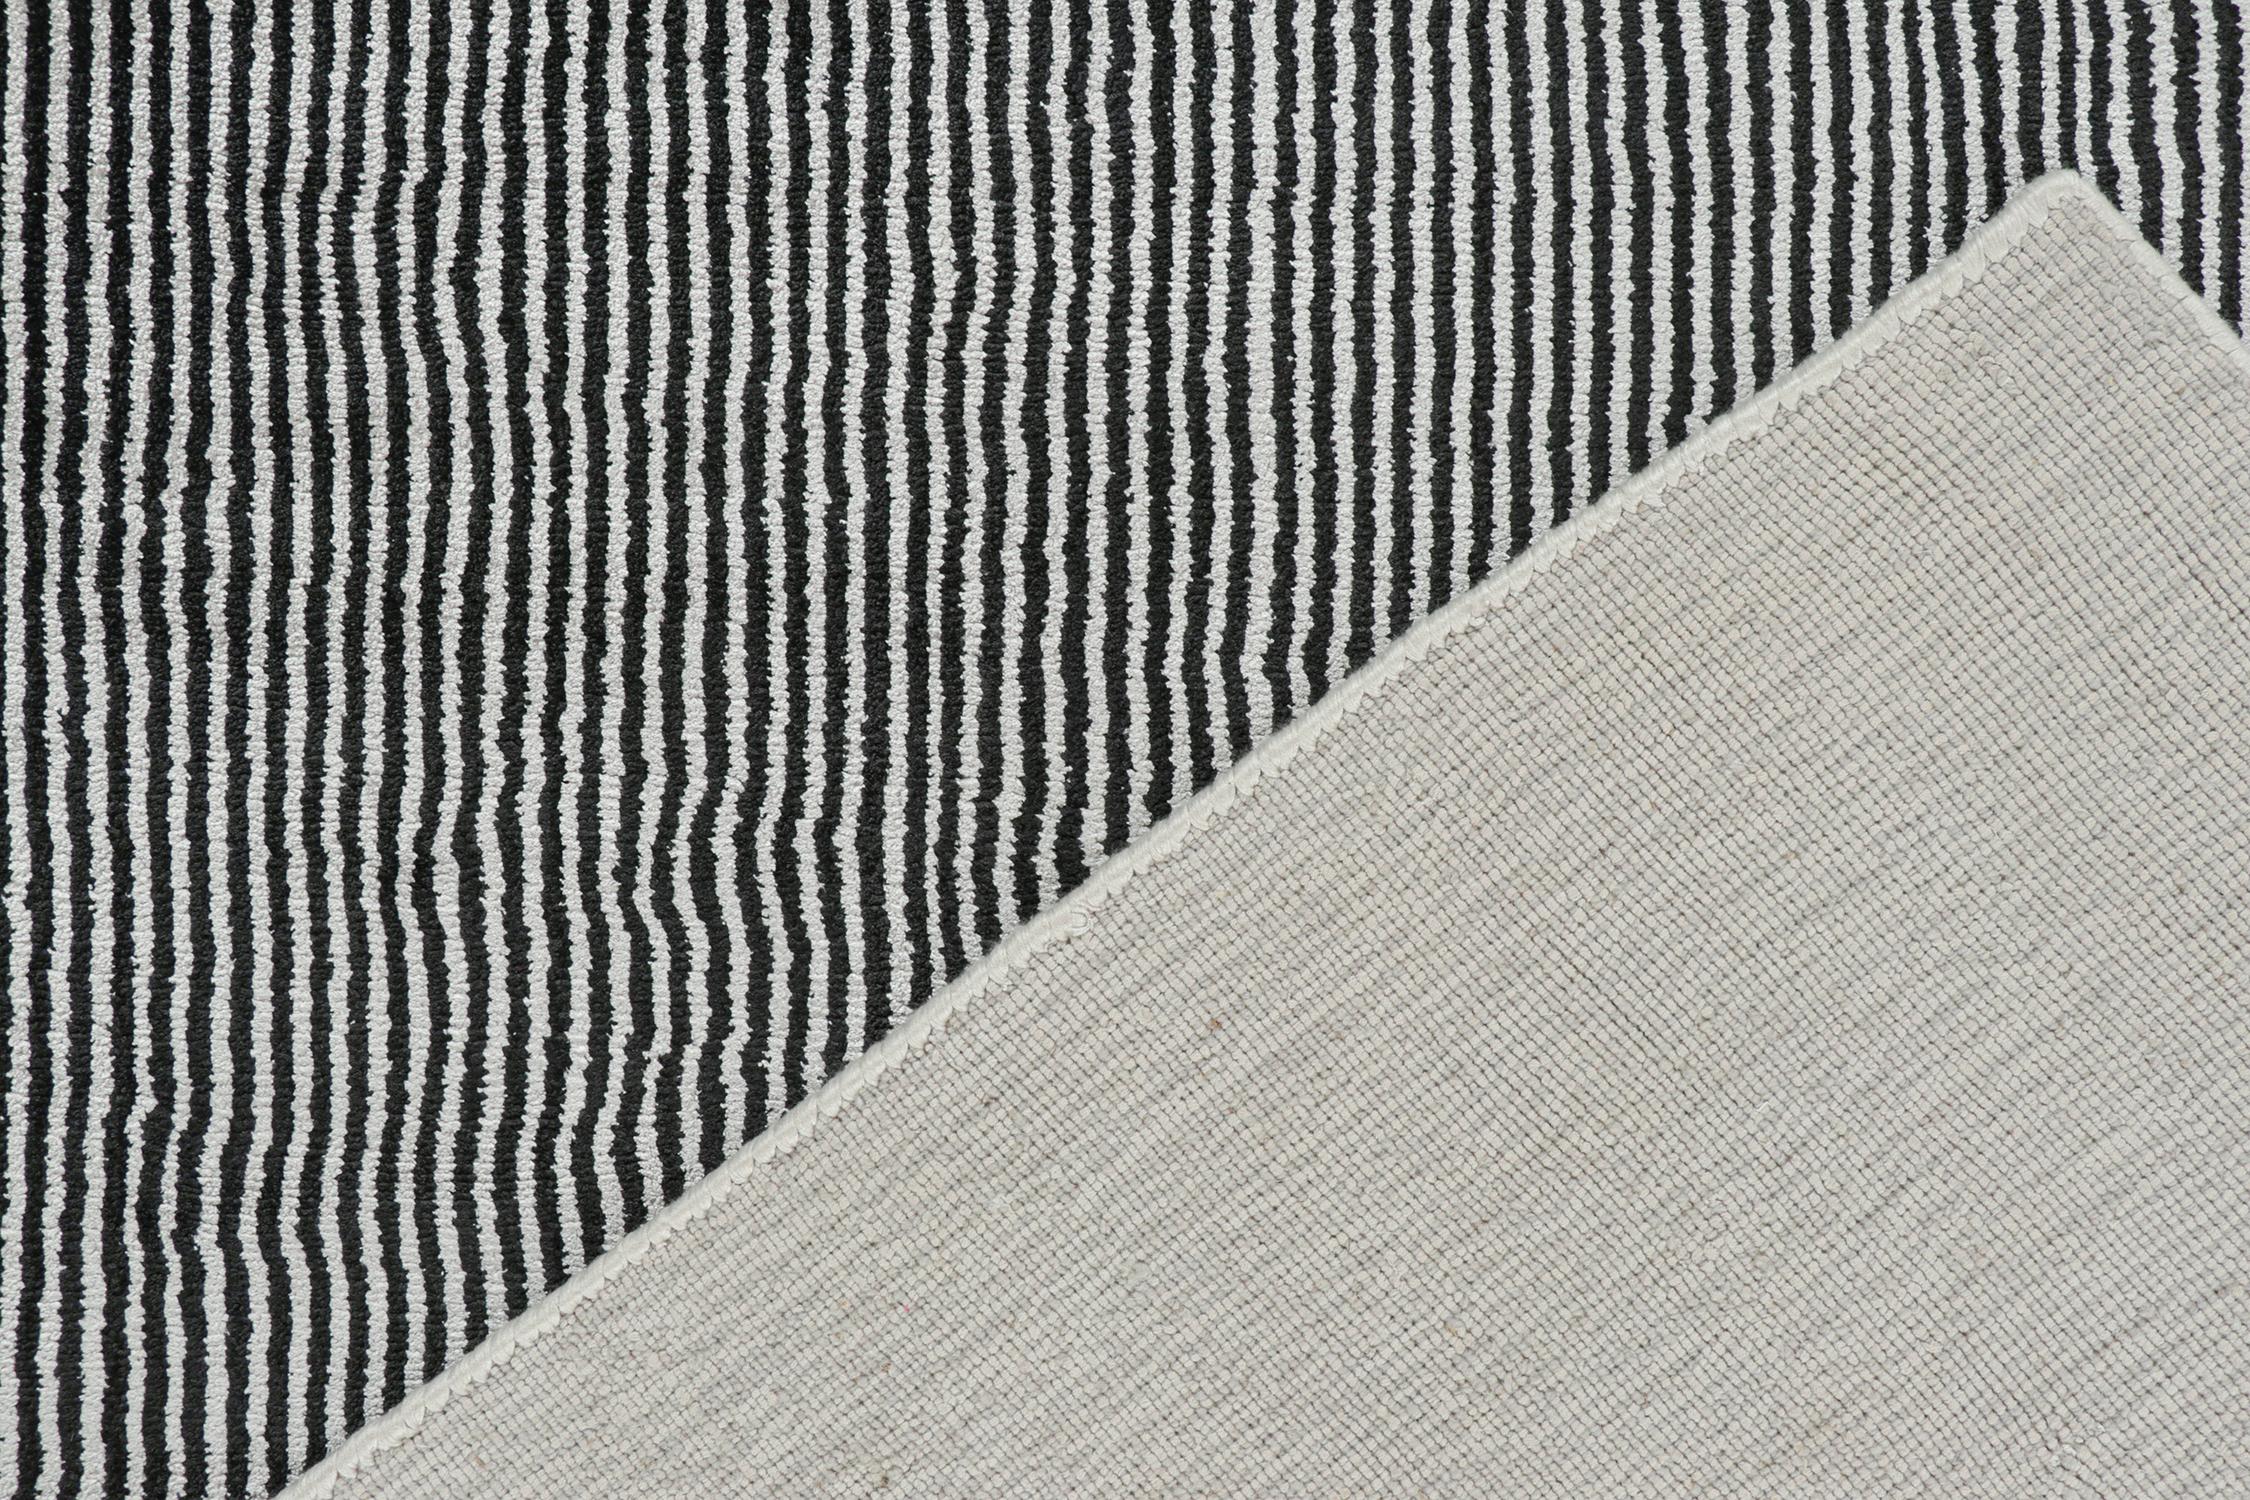 Silk Rug & Kilim’s Modern Rug in Black and White Geometric Patterns For Sale